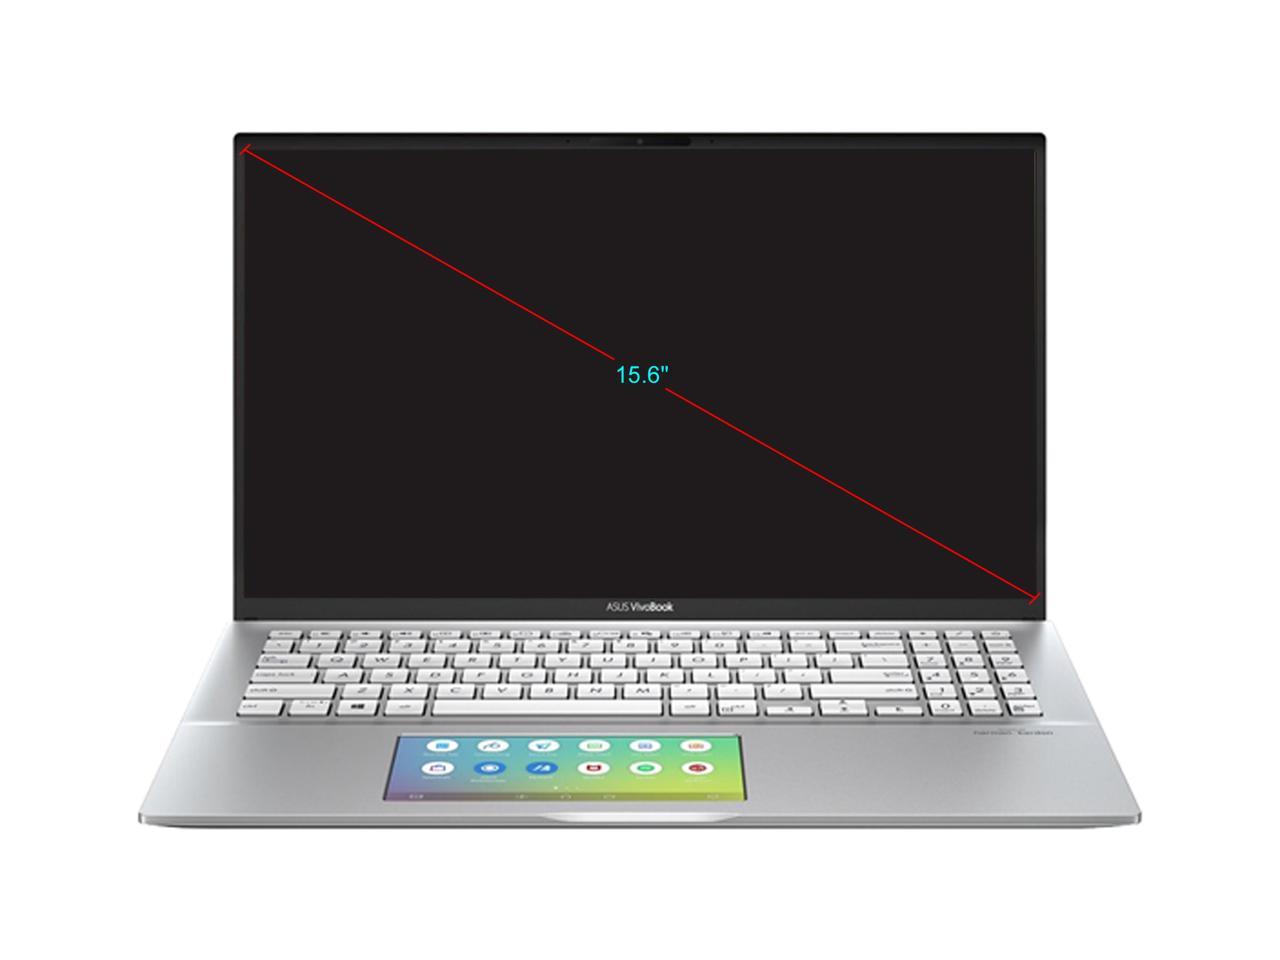 ASUS VivoBook S15 S532 Thin & Light Laptop, 15.6" FHD, Intel Core i5-10210U CPU, 8 GB DDR4 RAM, 512 GB PCIe SSD, Windows 10 Home, IR camera, S532FA-DH55, Transparent Silver - Metal